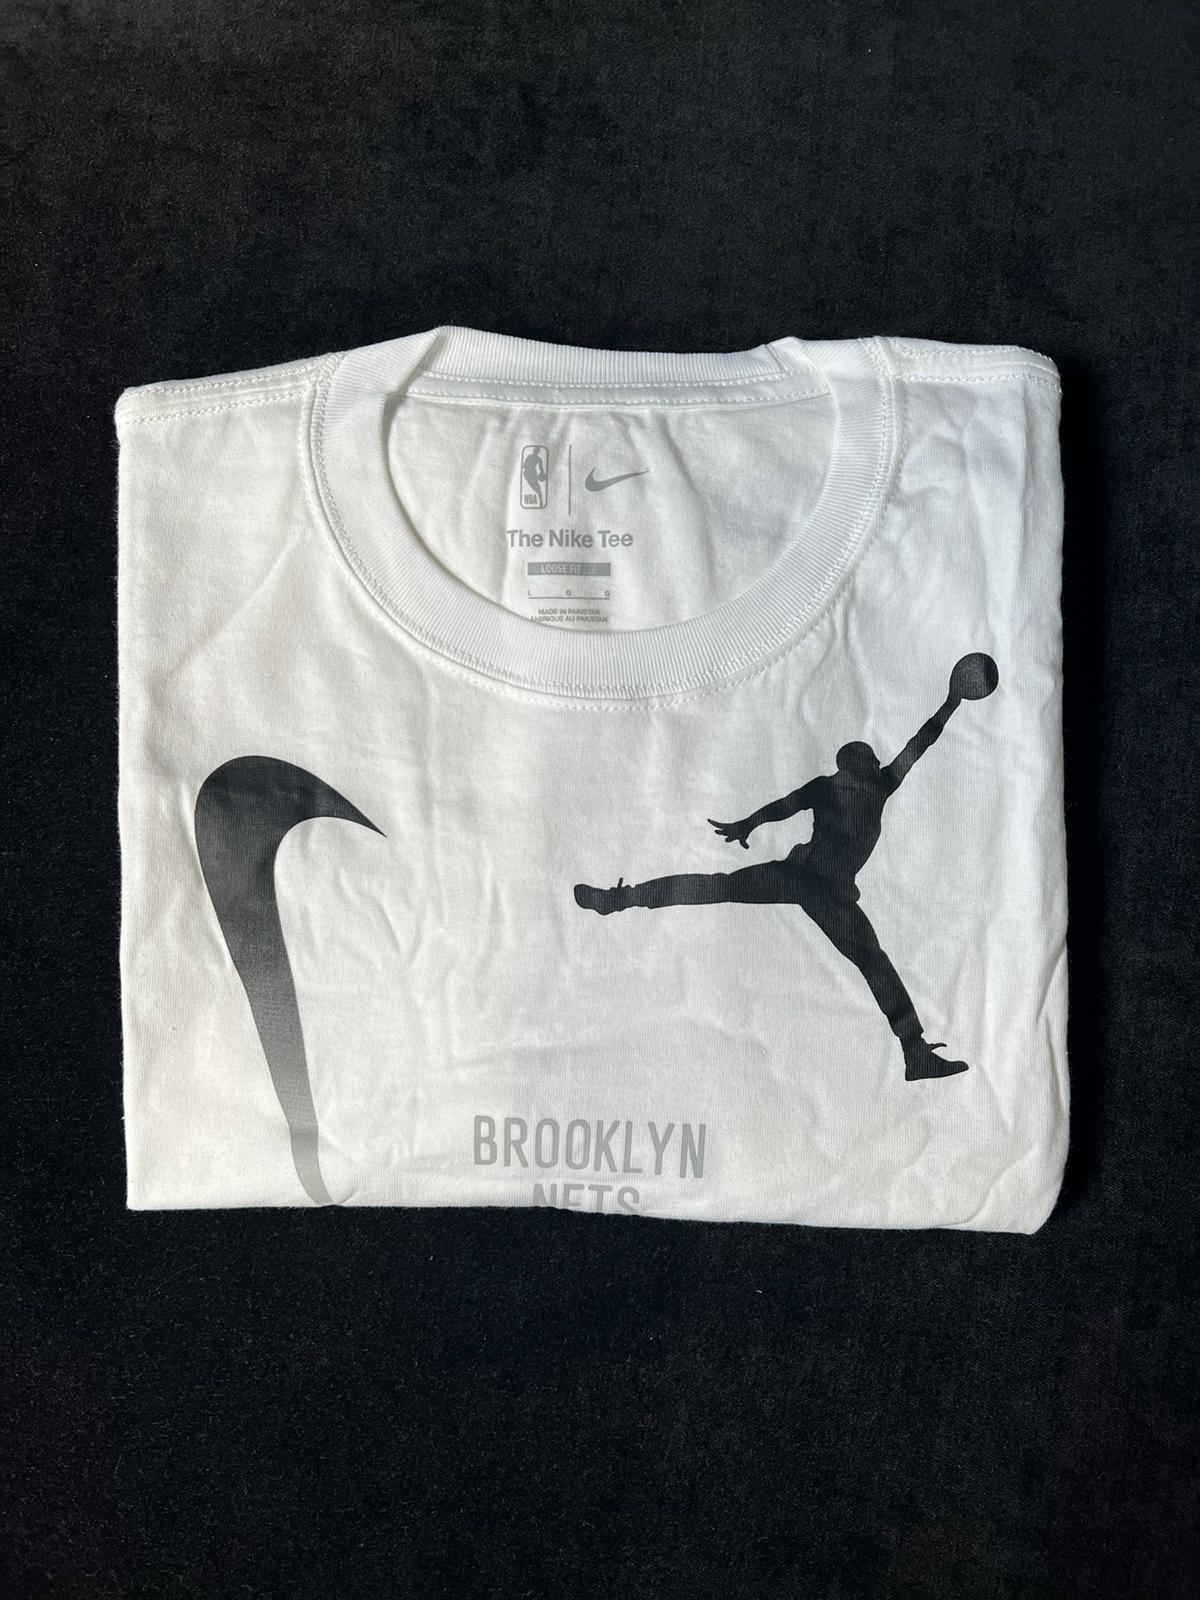 Nike Jordan Brooklyn Nets T-shirt